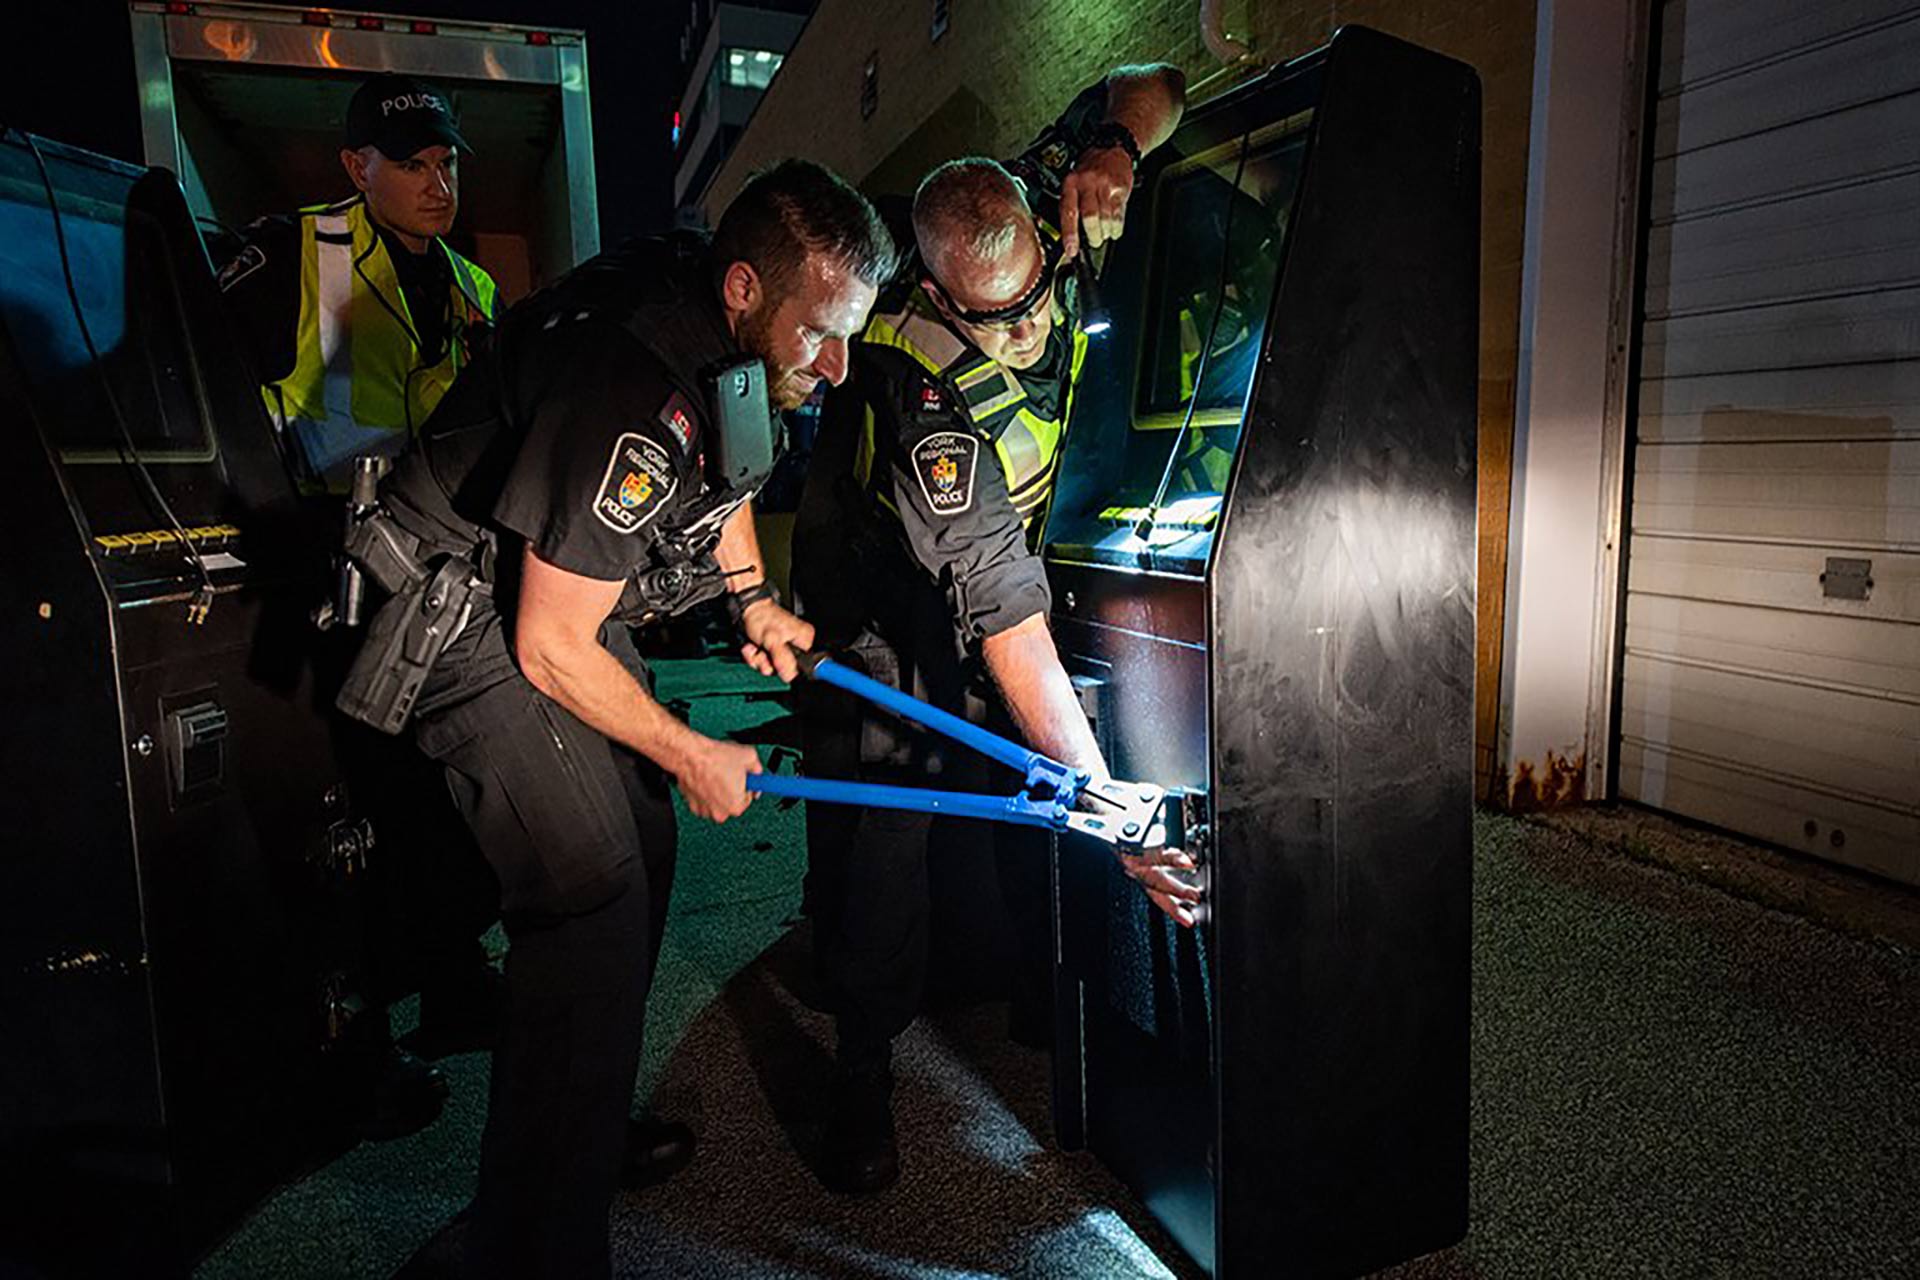 Police open a gaming machine qhiddqihkiekinv